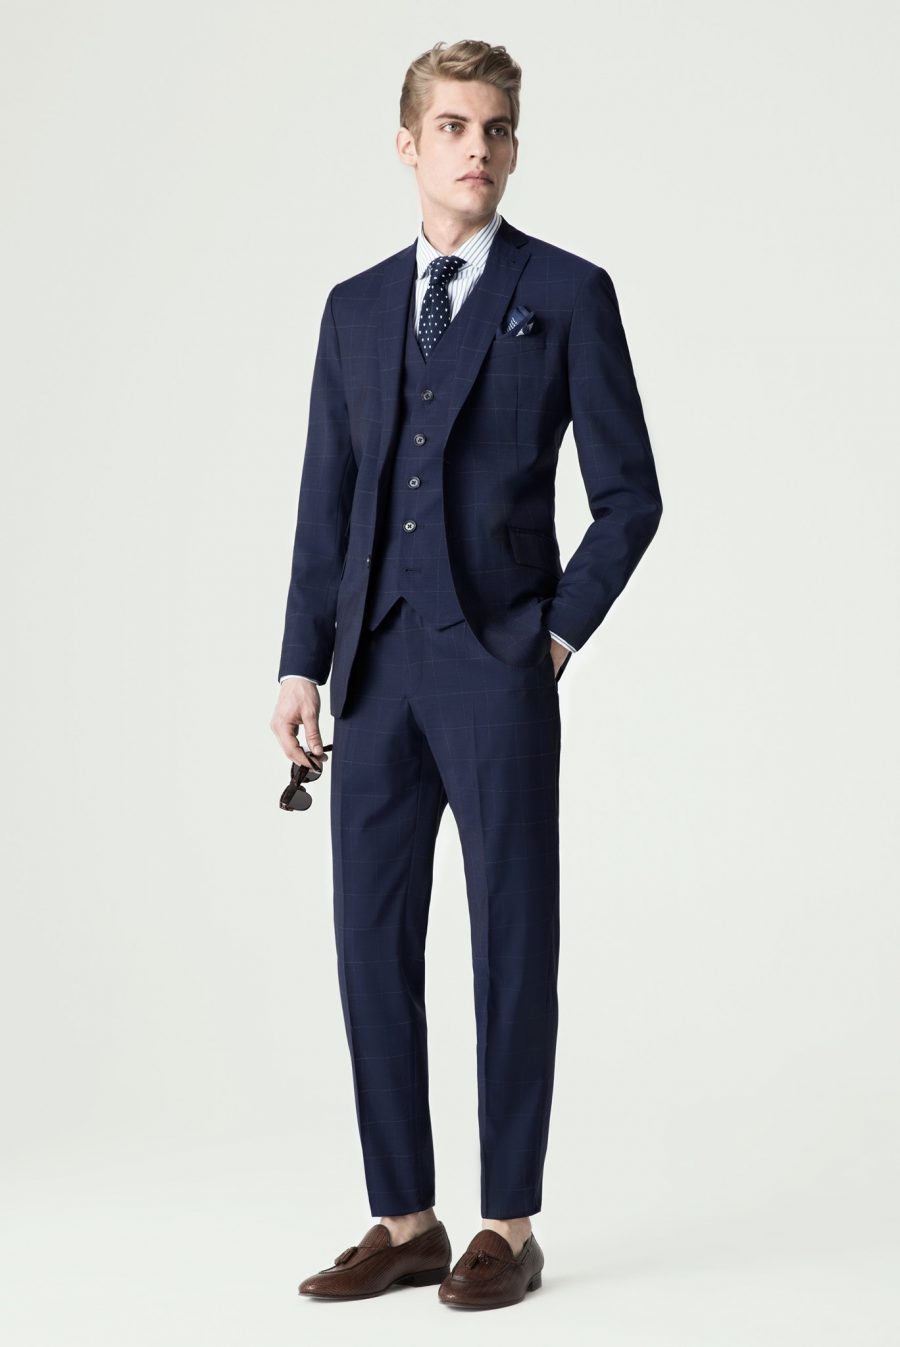 Mango Man 2016 Suit Style Guide